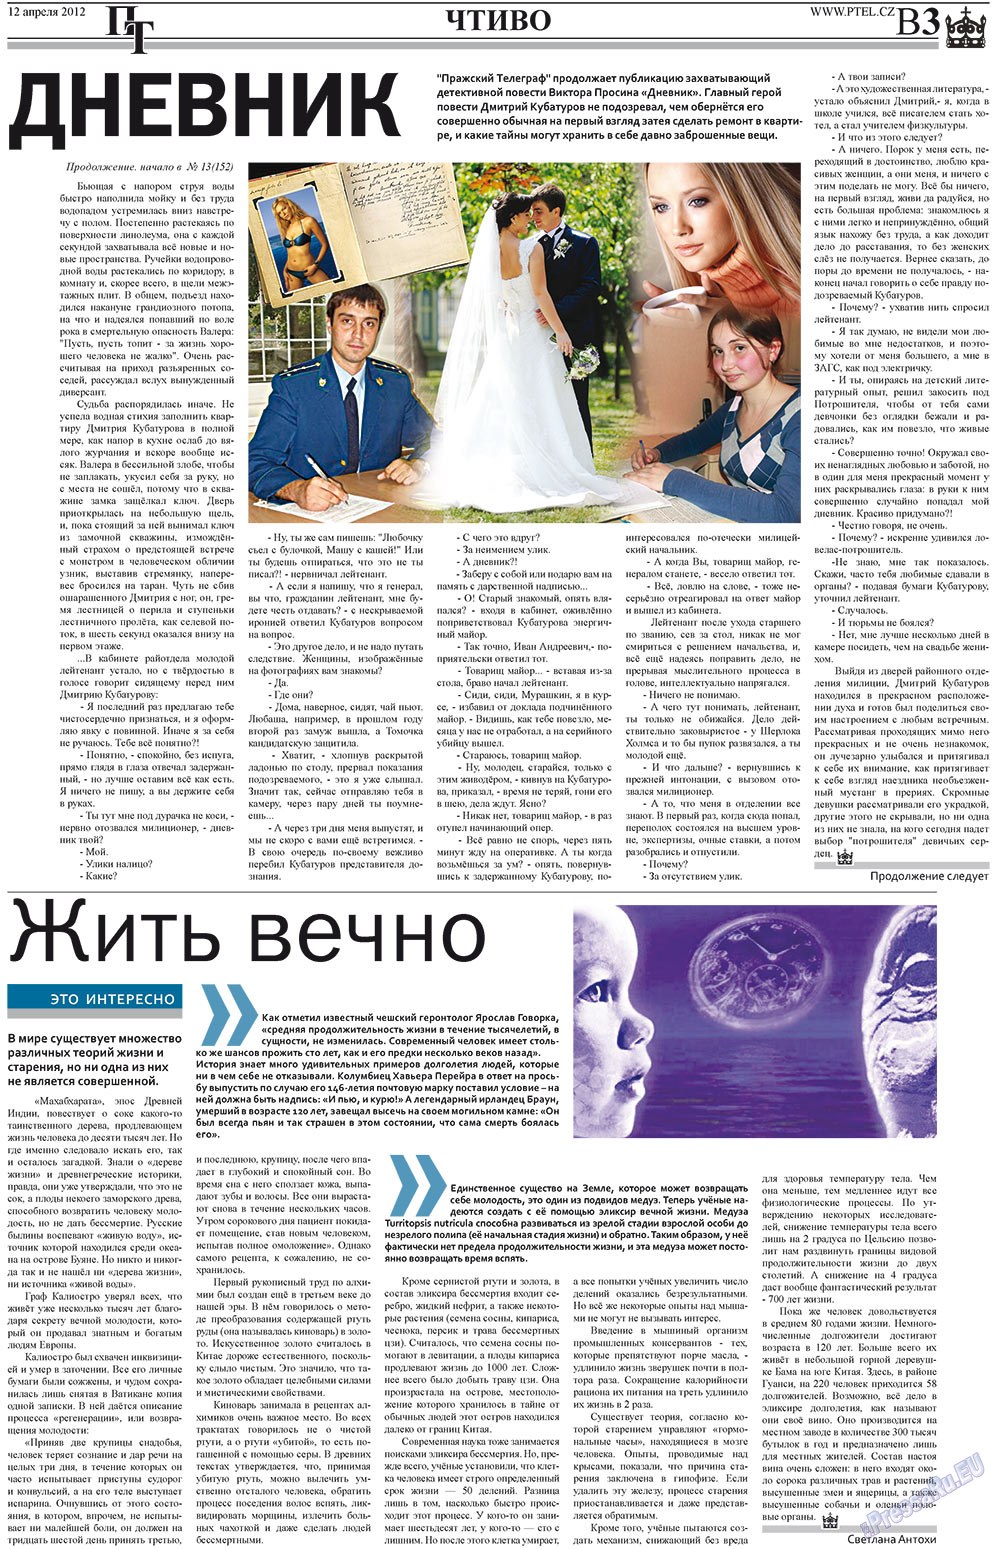 Пражский телеграф, газета. 2012 №15 стр.11